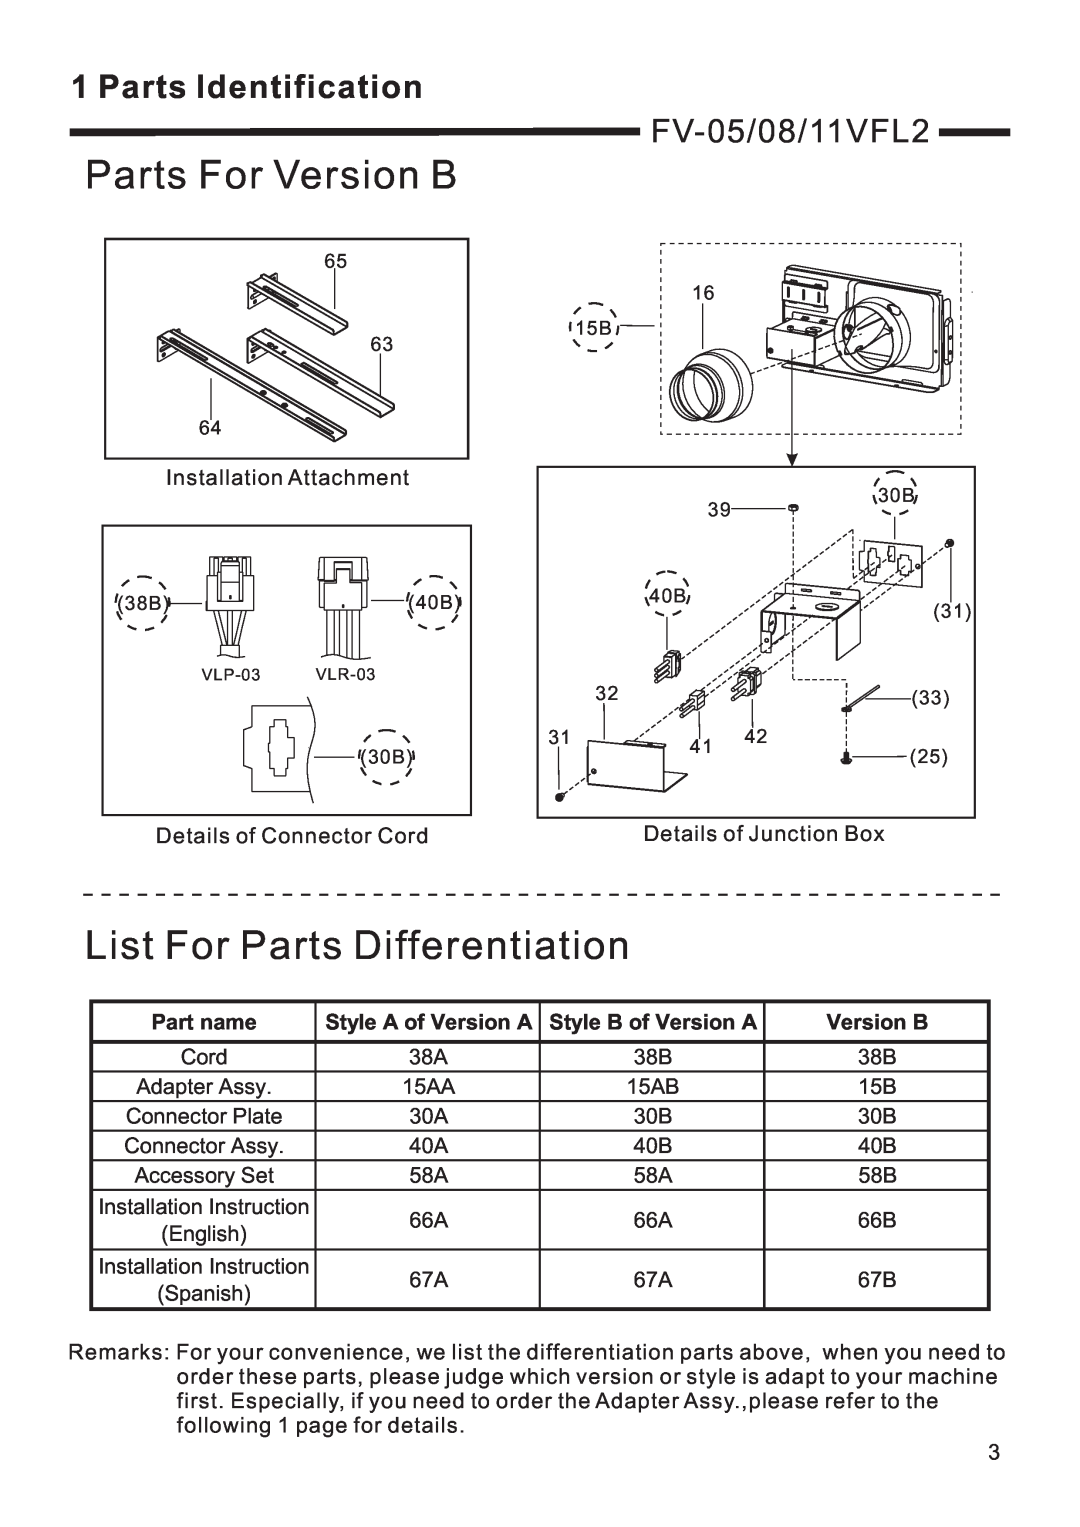 Panasonic FV-05/08/11VFL2 Parts For Version B, List For Parts Differentiation, Parts Identification, Part name 